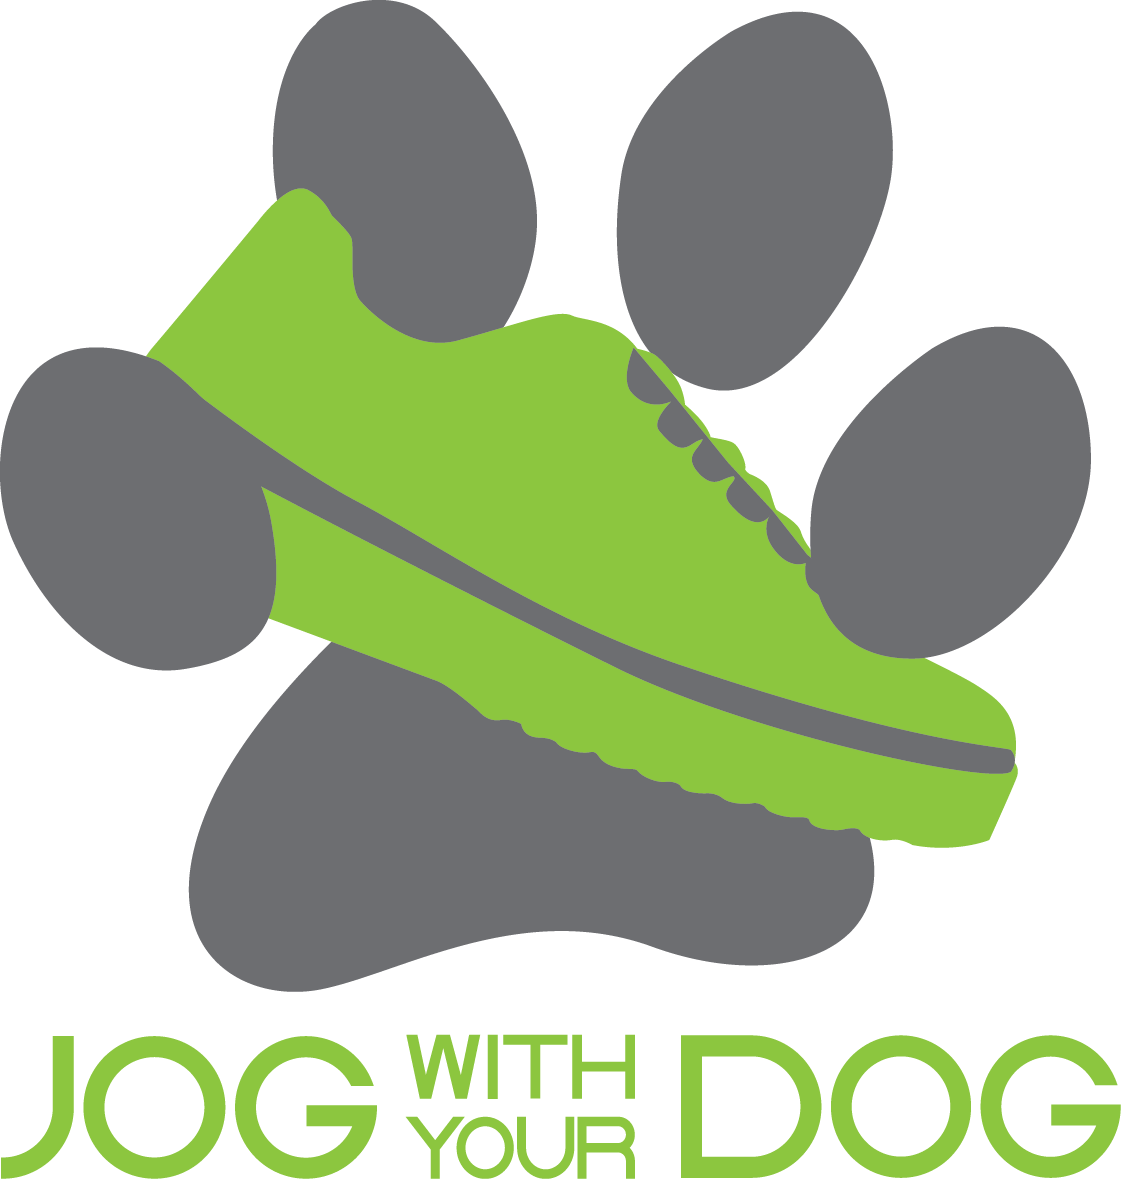 Jog With Your Dog 5k & 1 Mile Walk - Graphic Design (1121x1179)